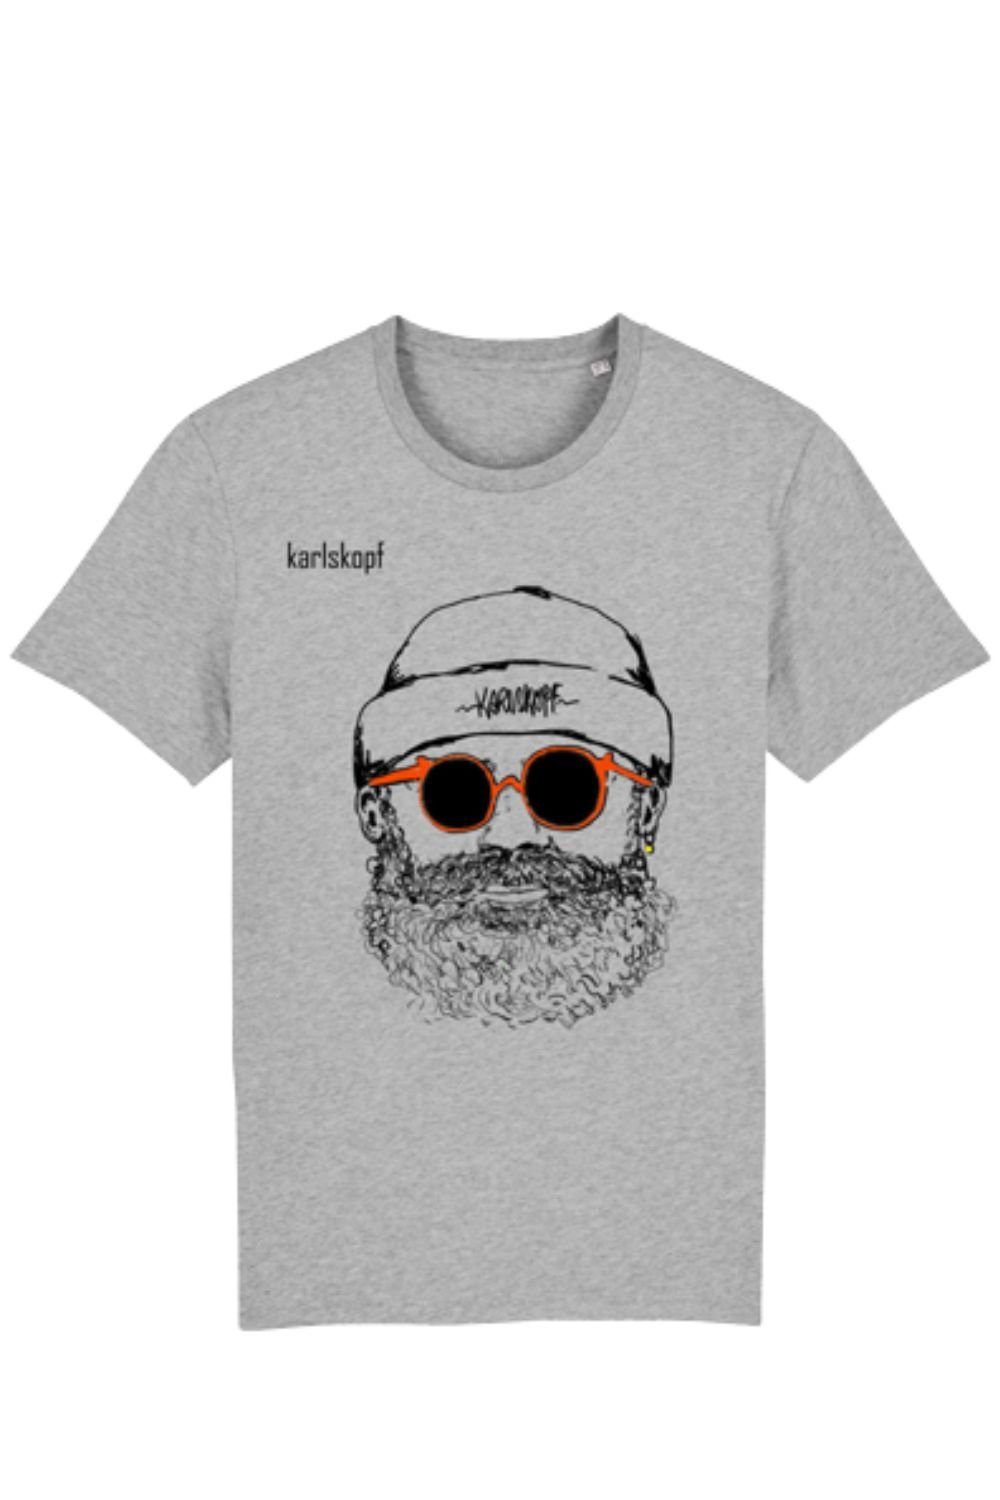 karlskopf HIPSTER Rundhalsshirt Grau Basic Print-Shirt